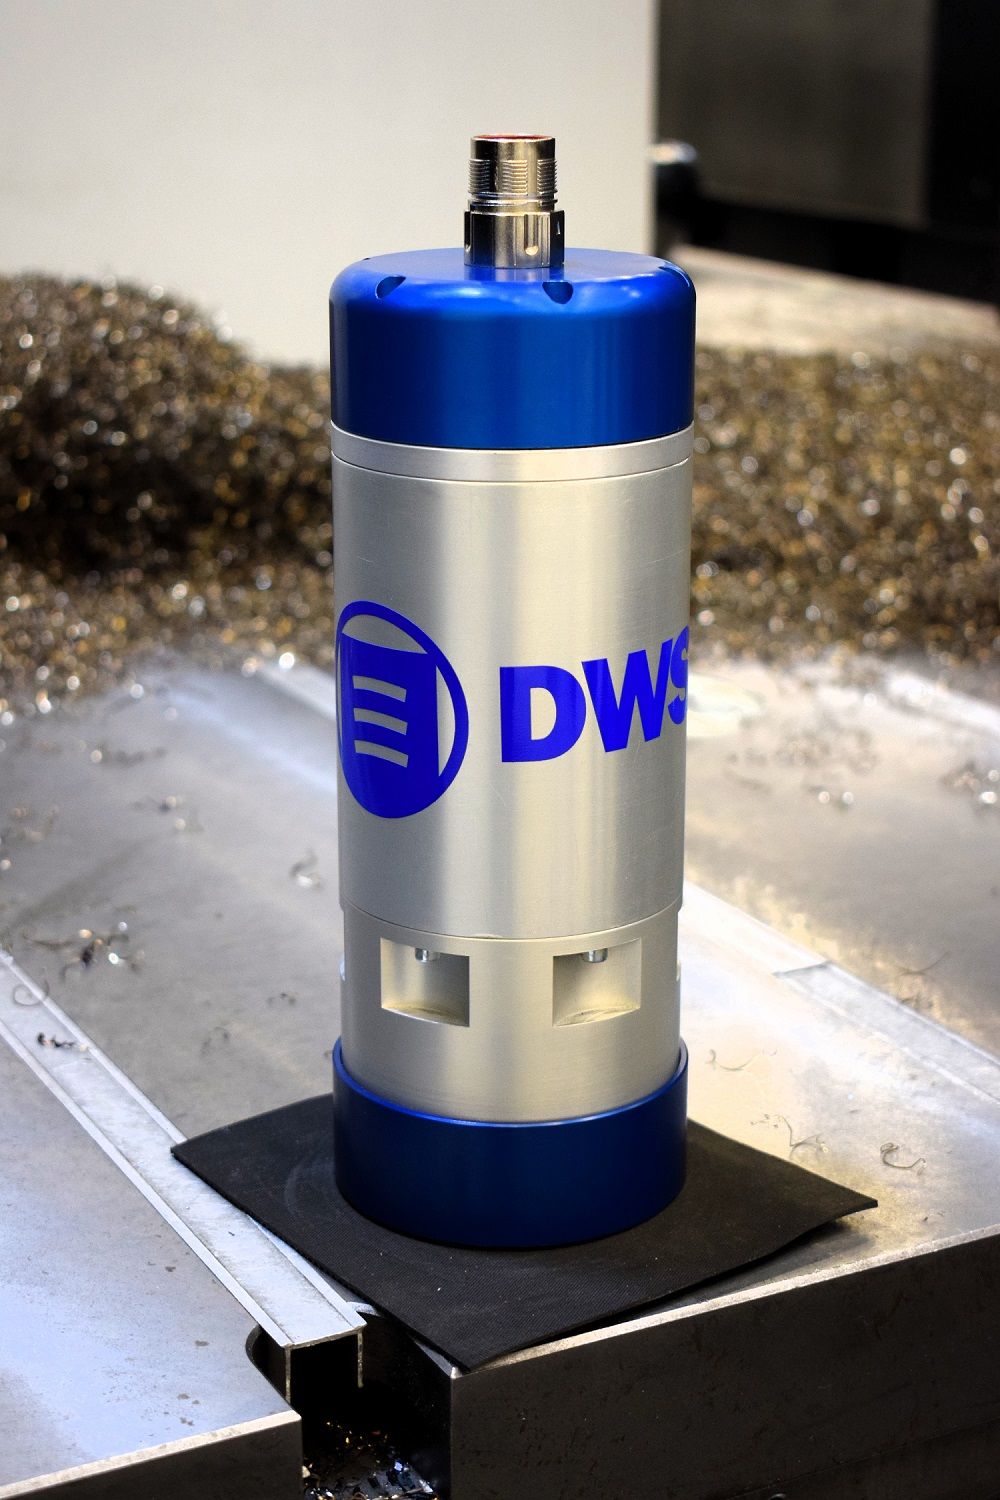 Soraluce DWS actuator for Dynamic Workpiece Stabilizing